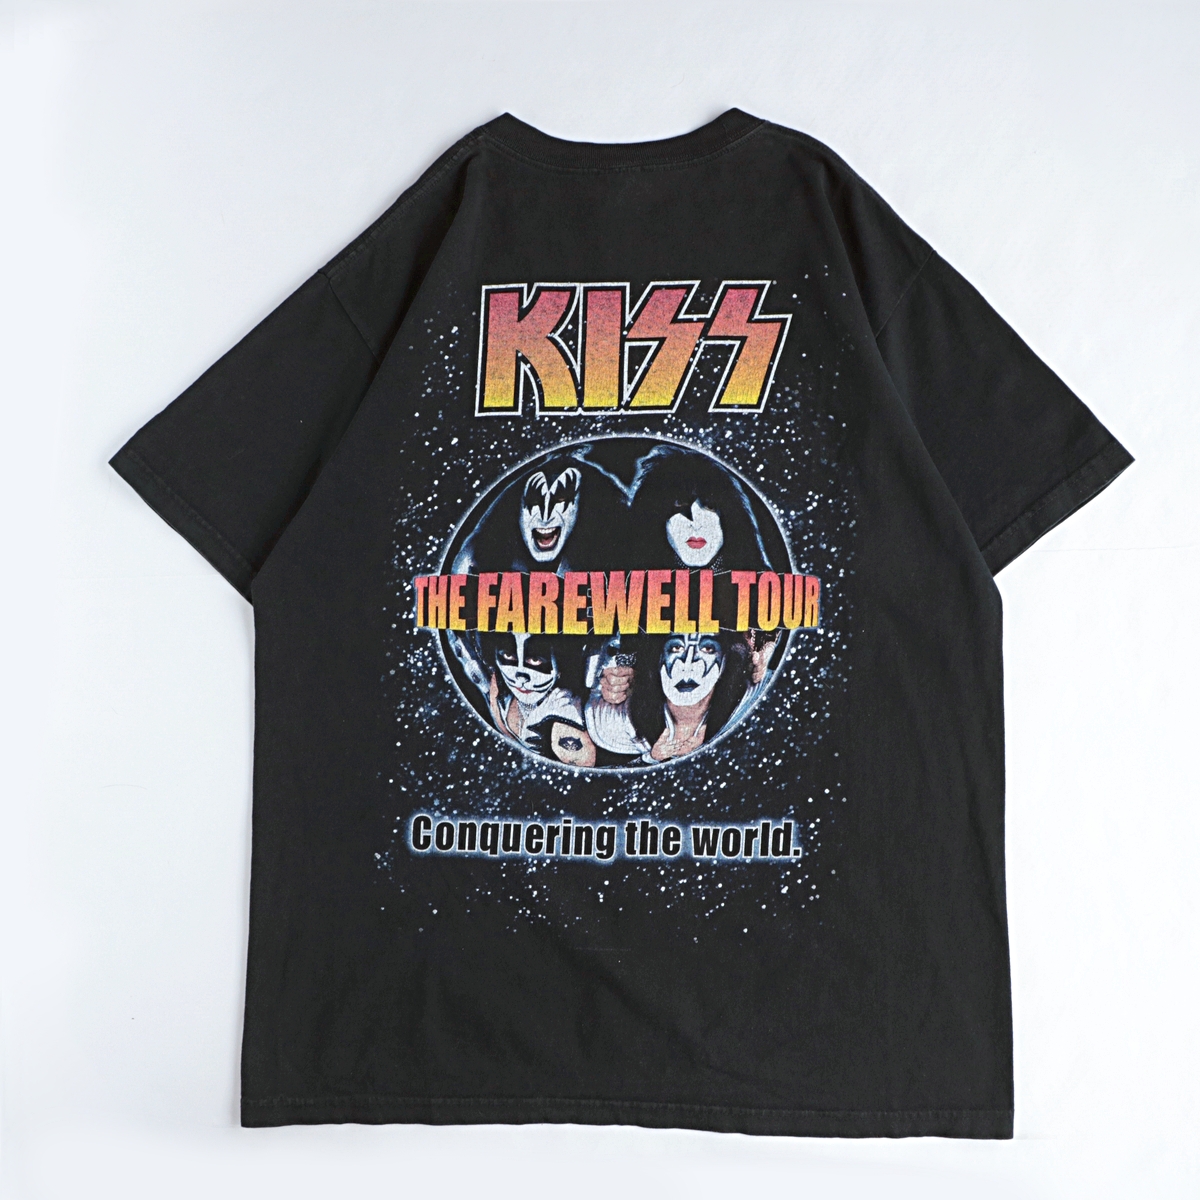 00s KISS “THE FAREWELL TOUR” バンド Tシャツ 古着 used – khaki 